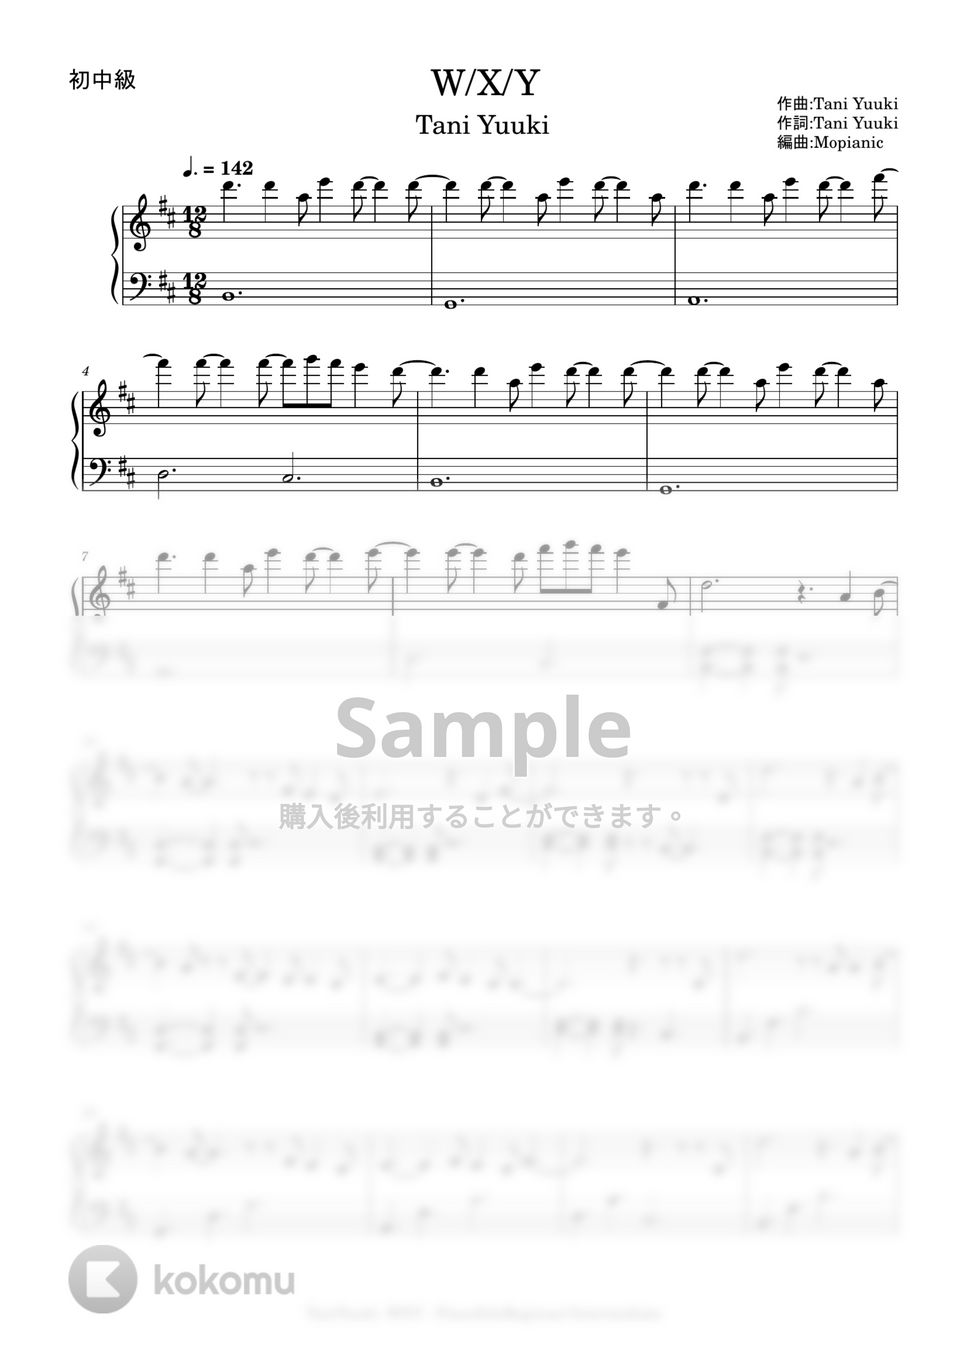 Tani Yuuki - W/X/Y (beginner to intermediate, piano) by Mopianic